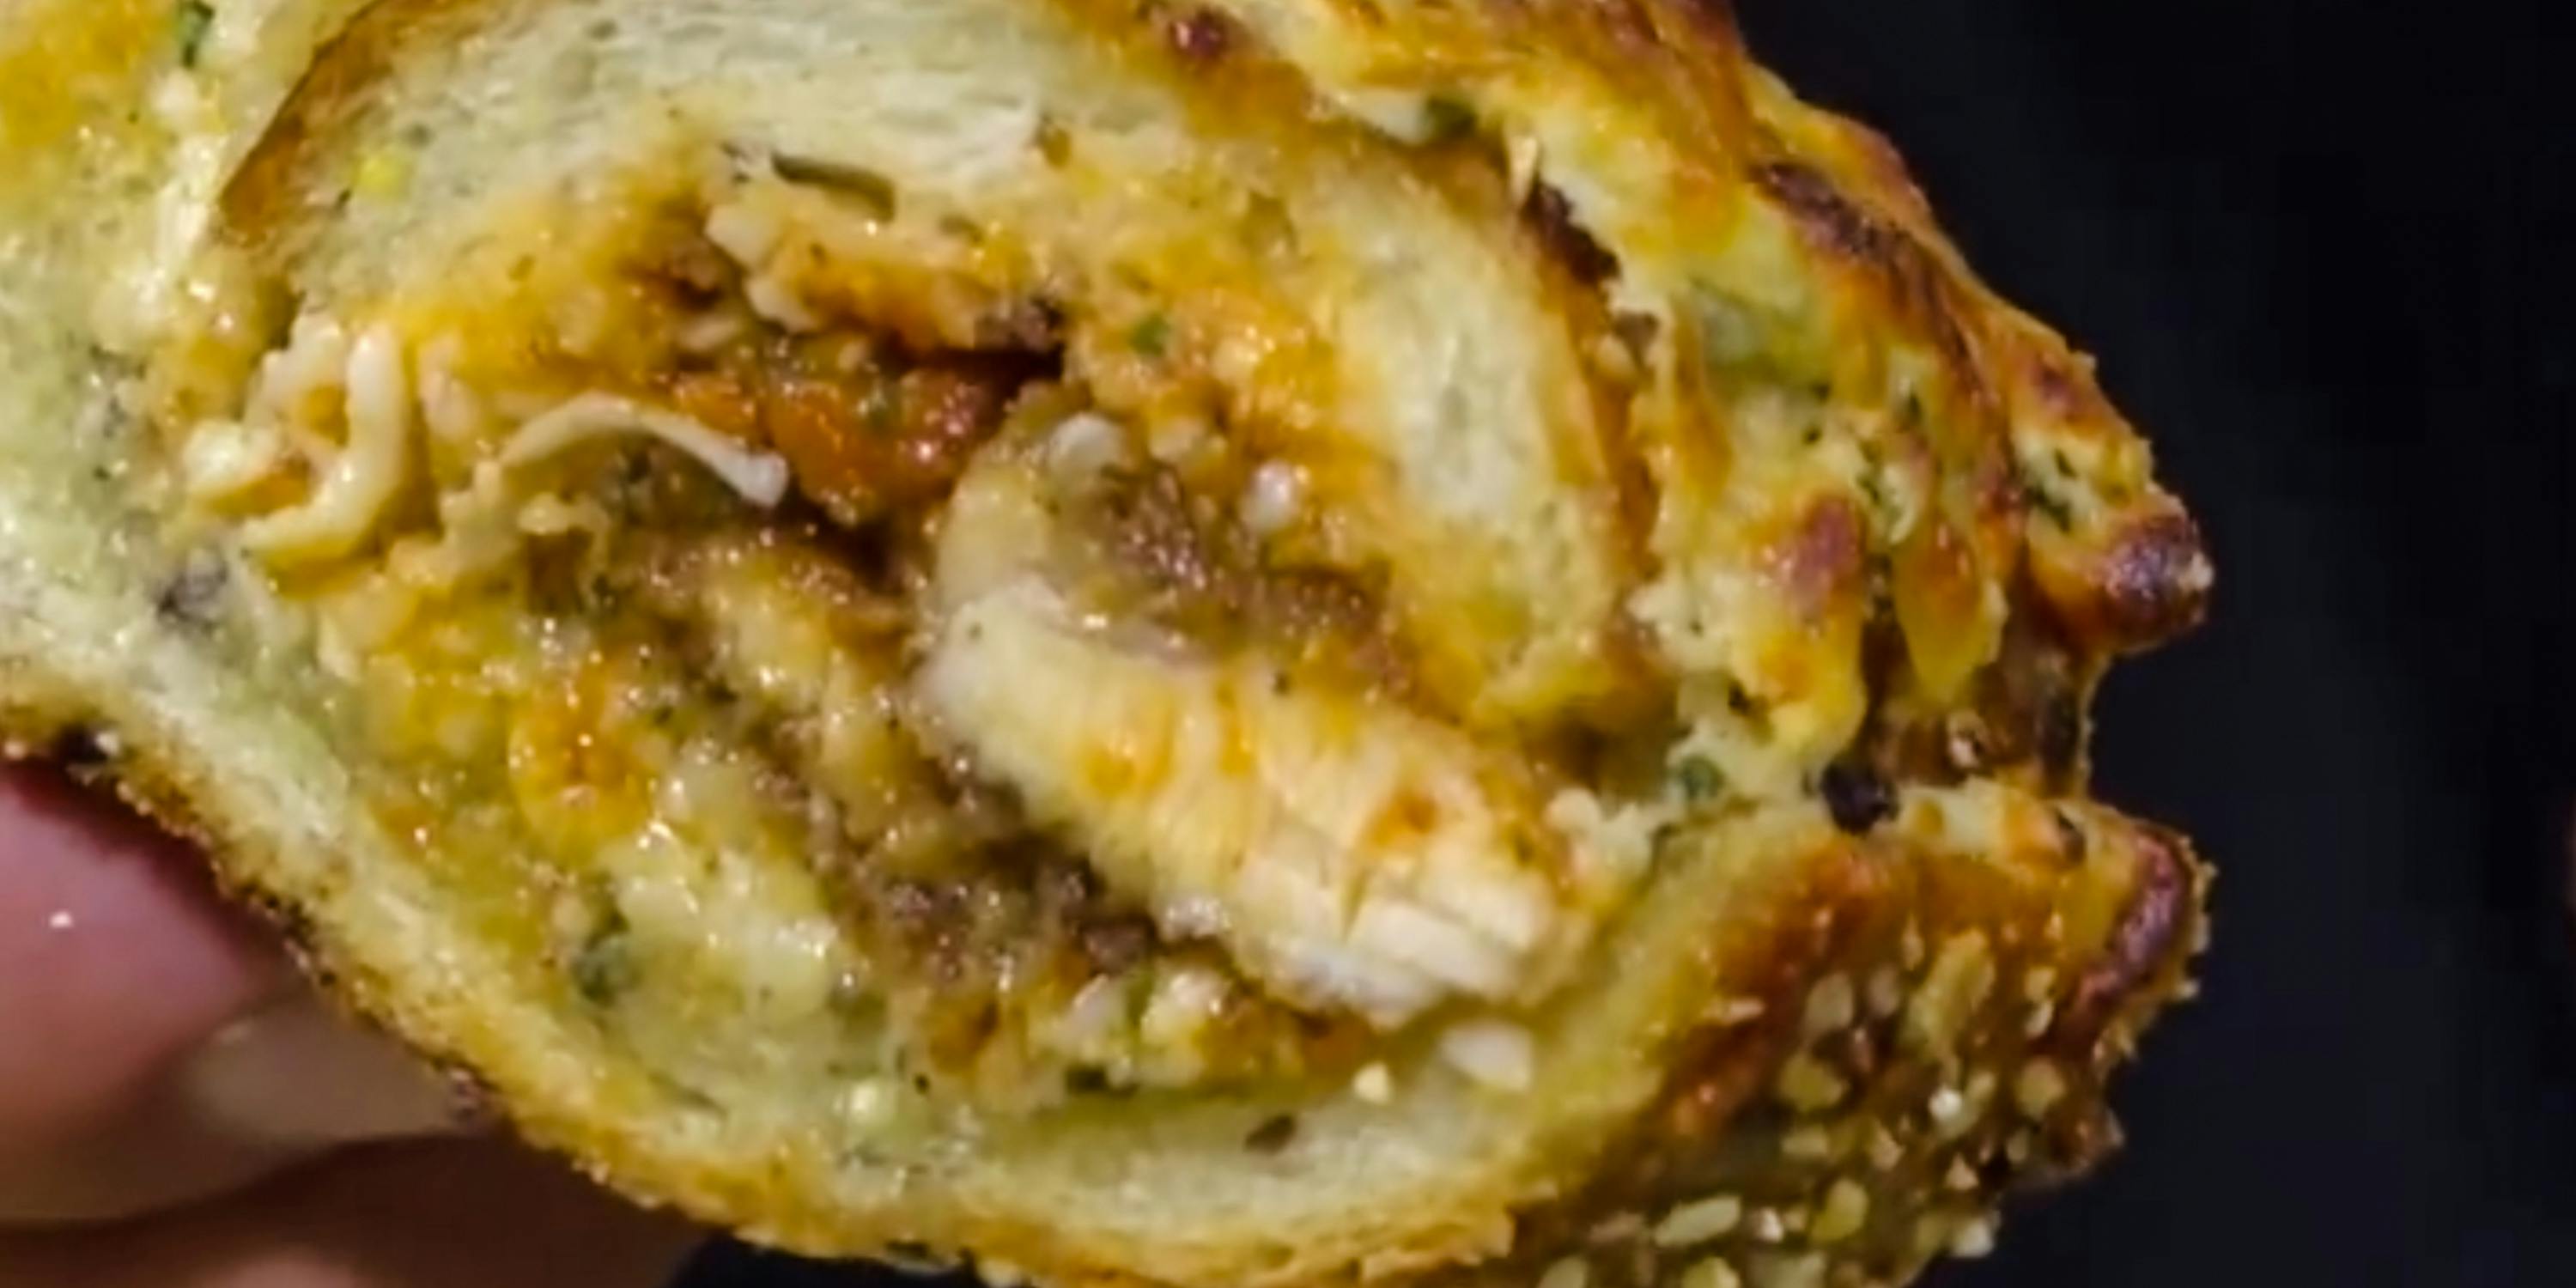 Weed infused Chicken Parmesan-Stuffed Garlic Bread